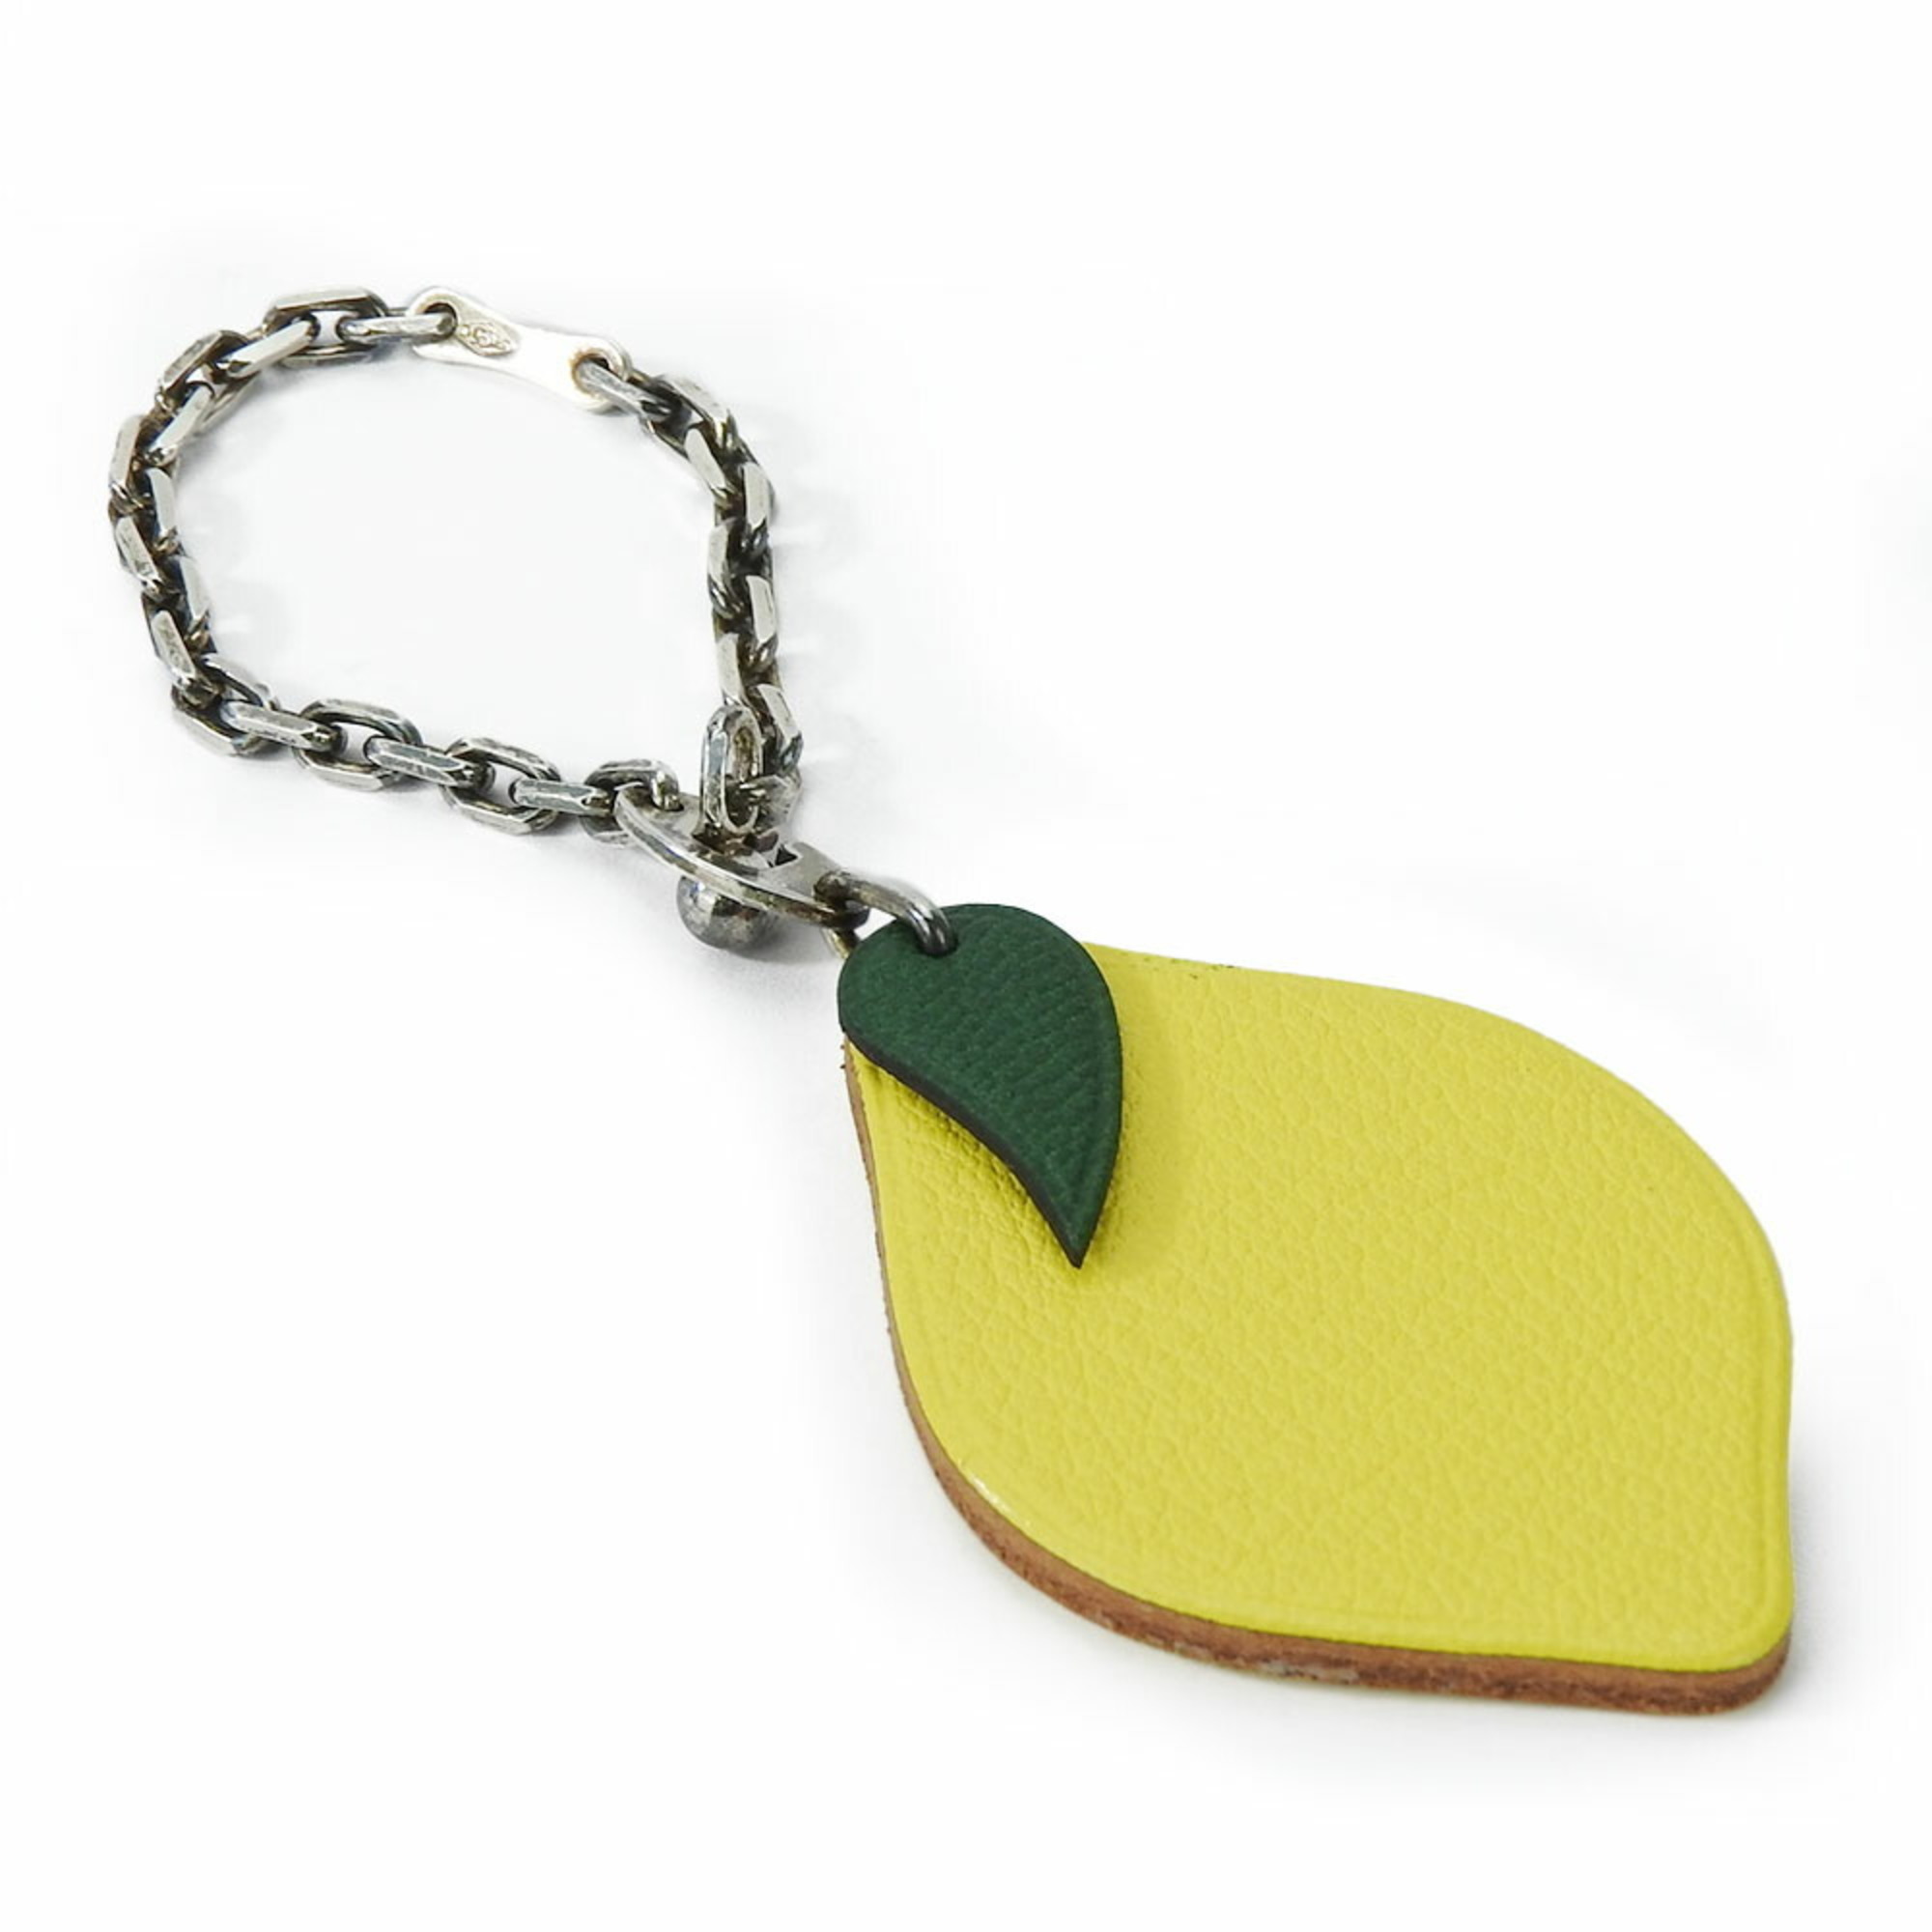 Hermes Bag Charm Leather Metal Yellow Fruit Lemon Accessory Women's HERMES